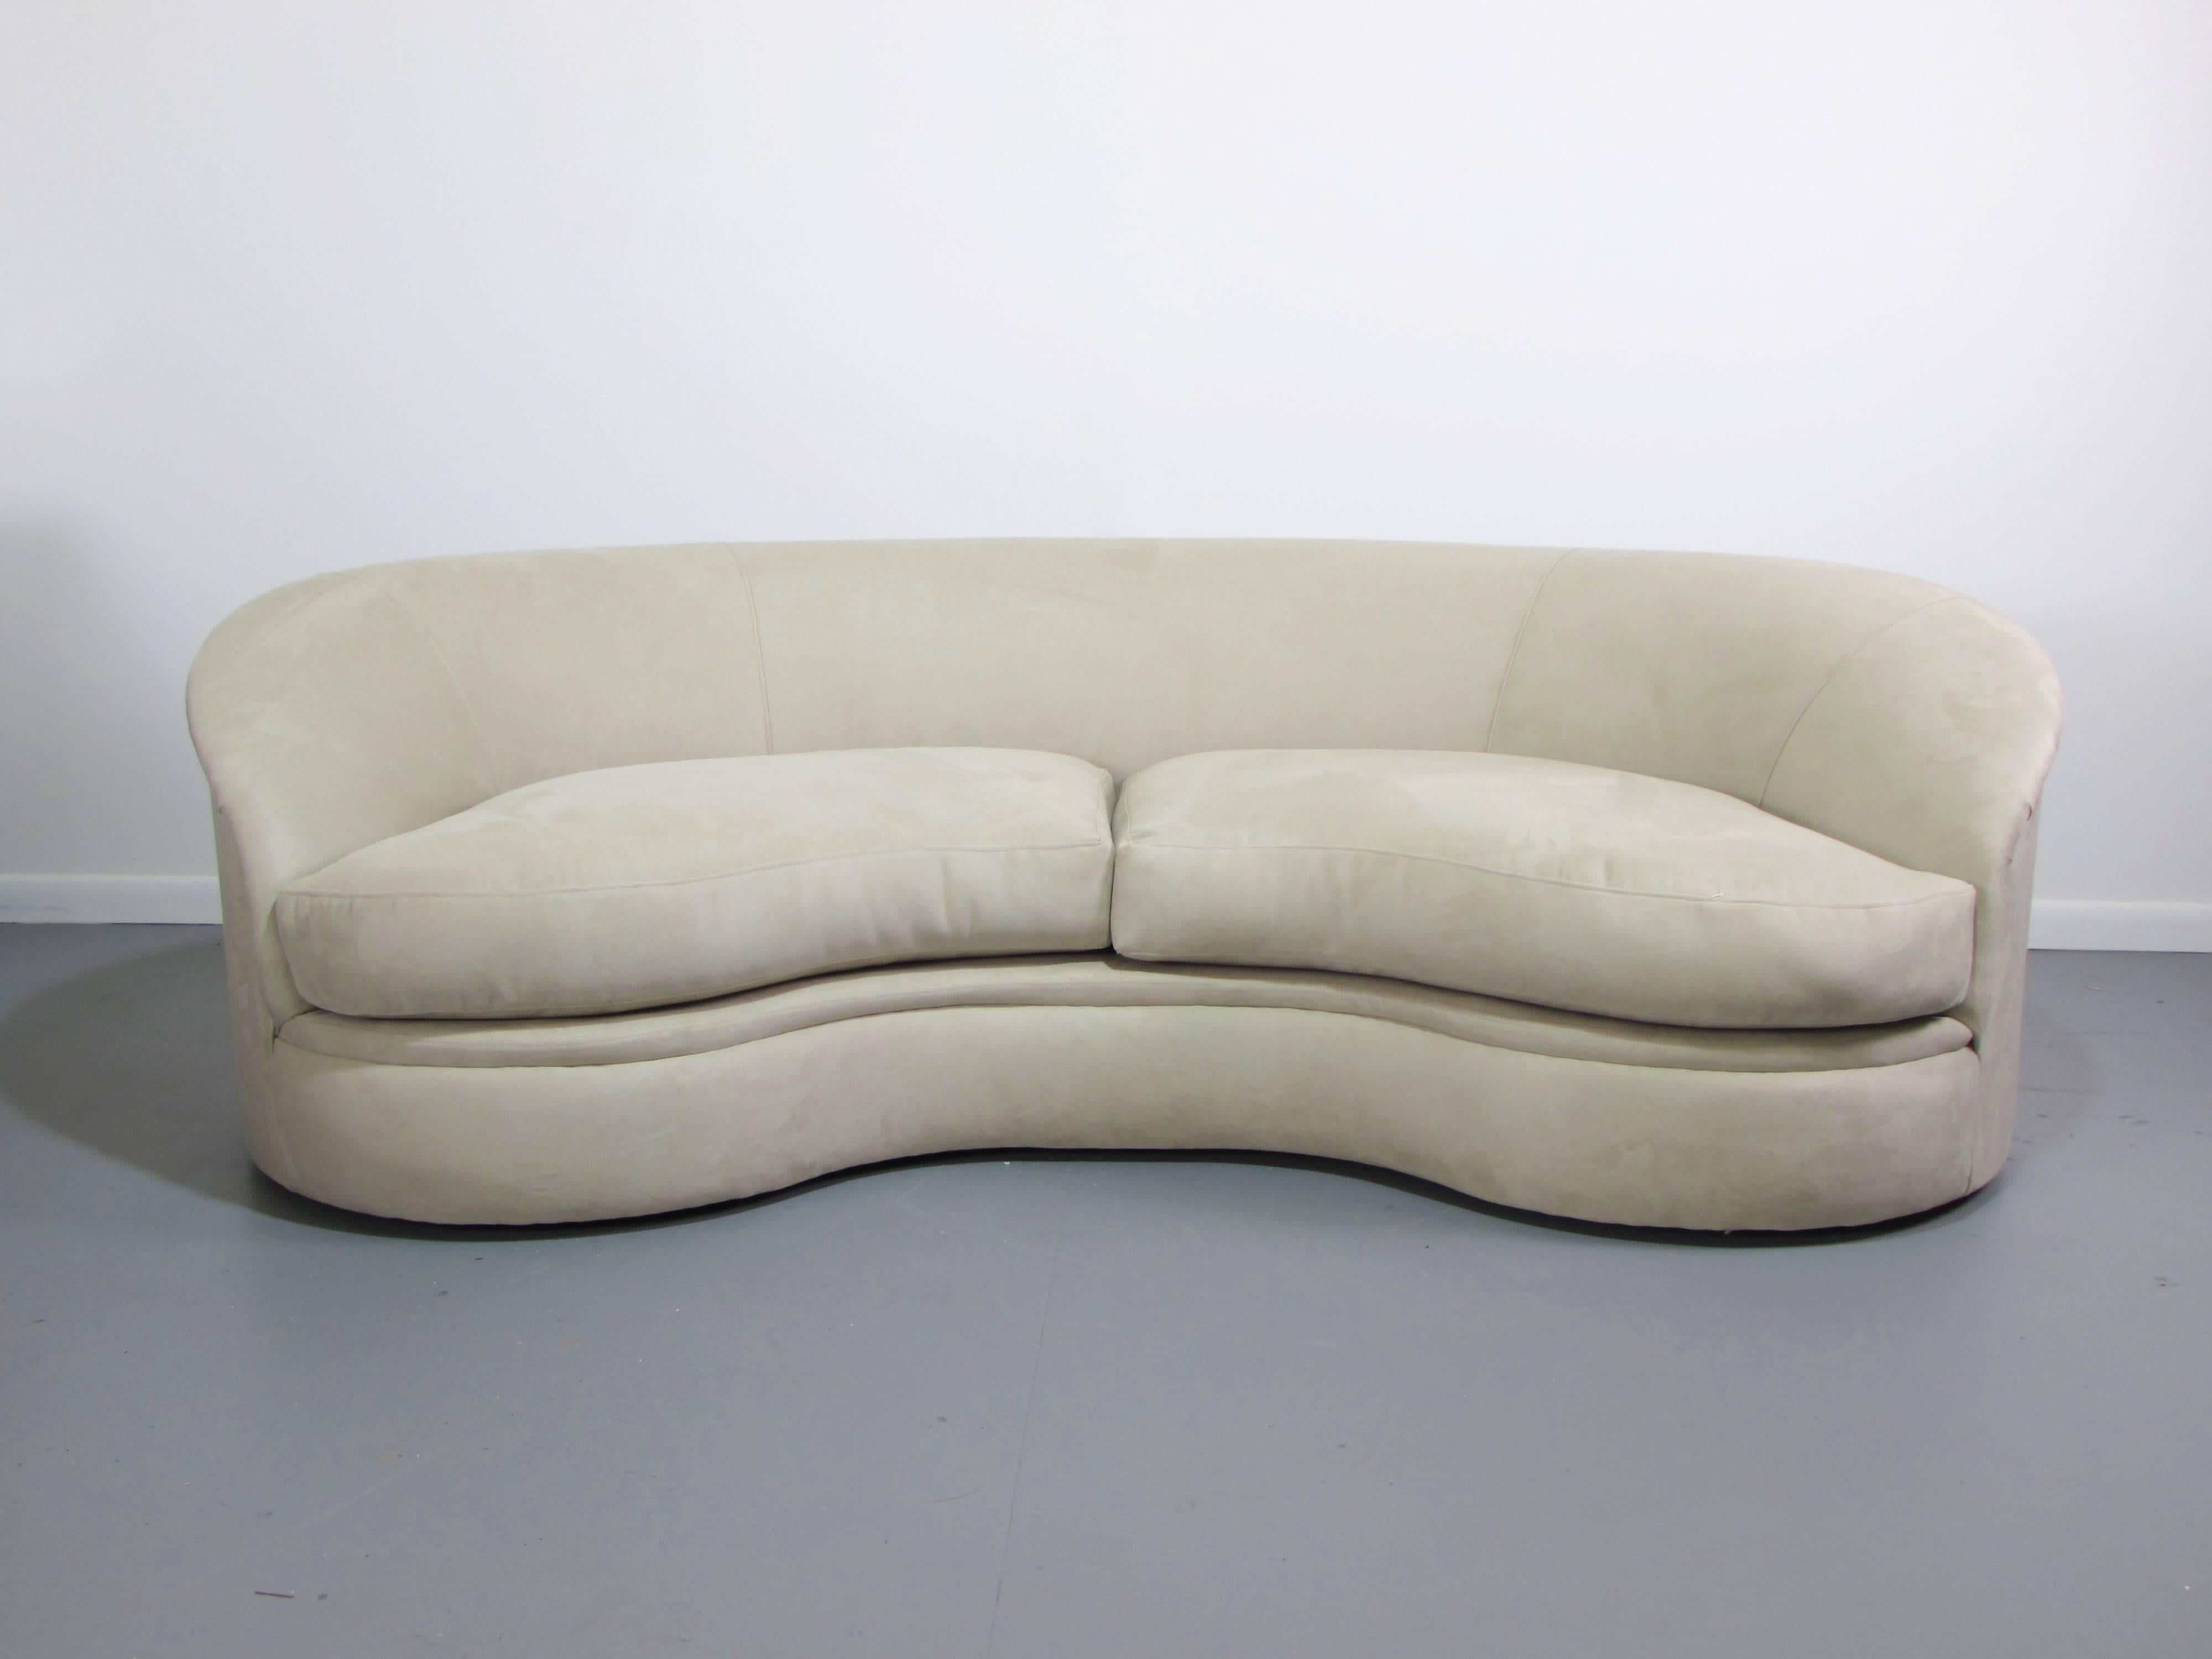 Mid-Century Modern Biomorphic Kidney Bean Shaped Sofa by Vladimir Kagan for Directional, 1970s